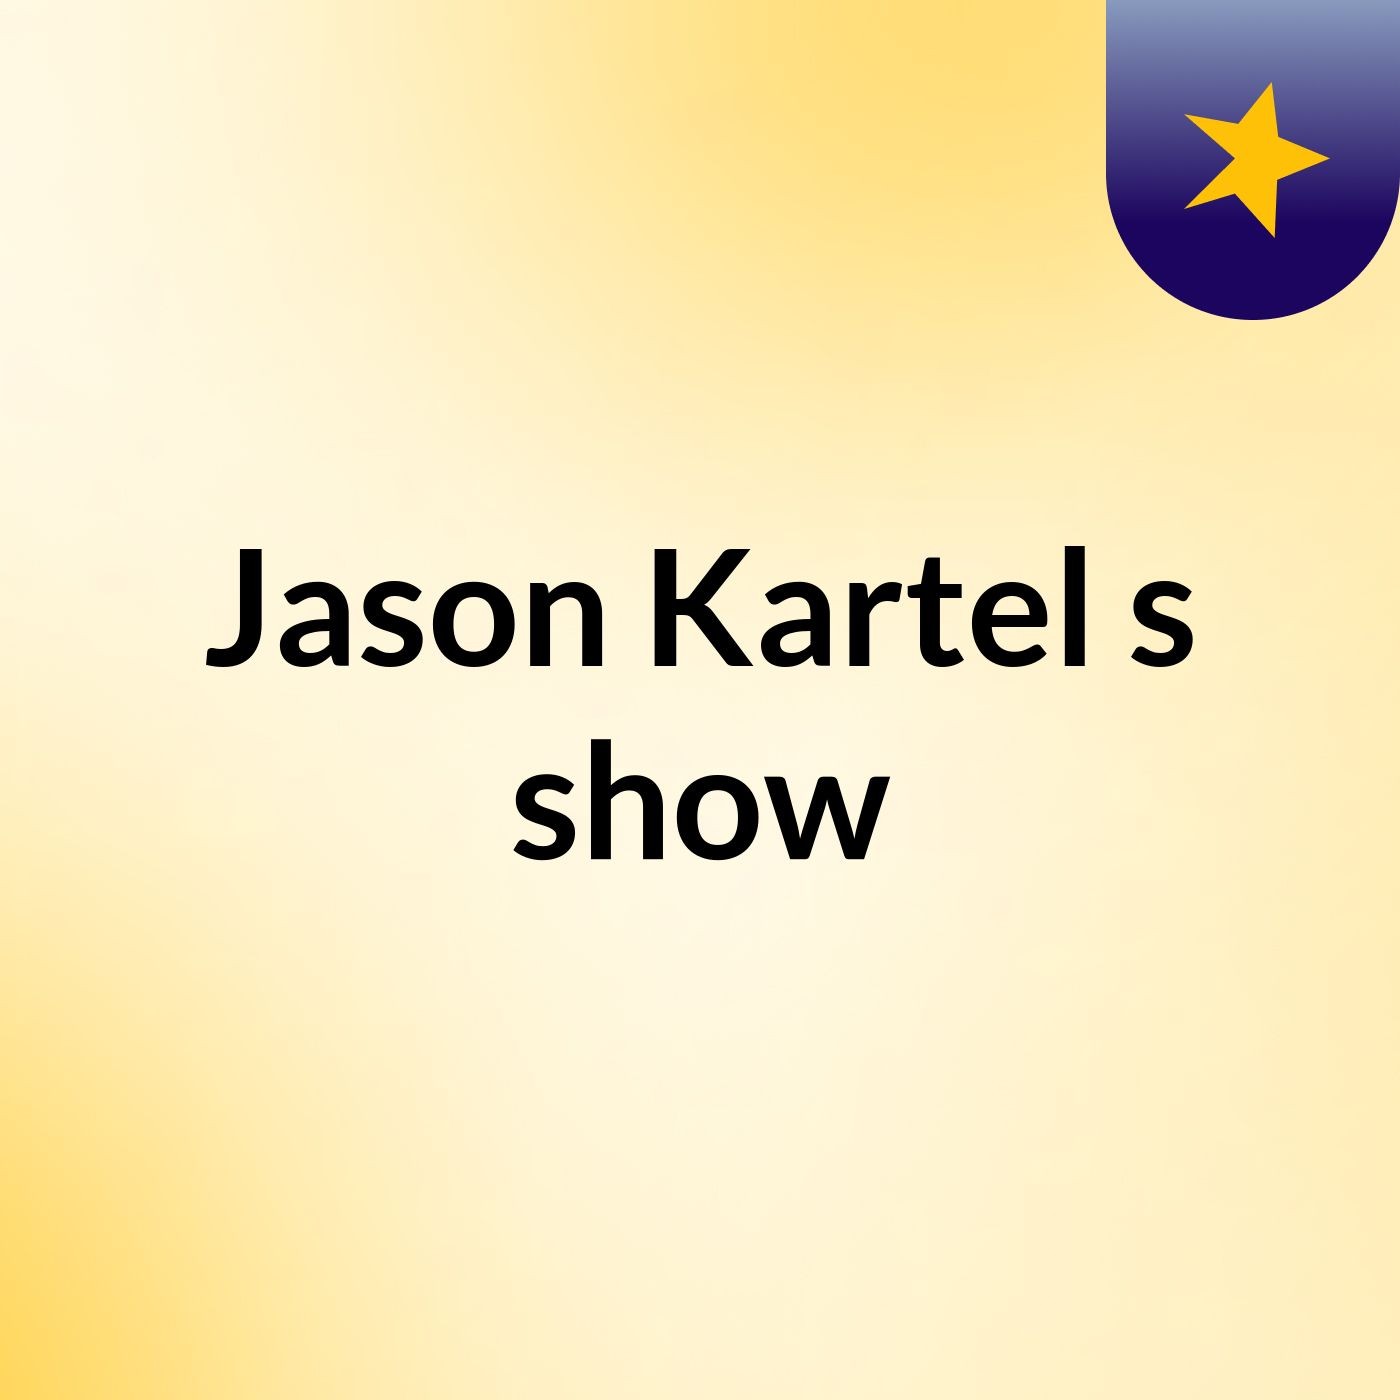 Jason Kartel's show